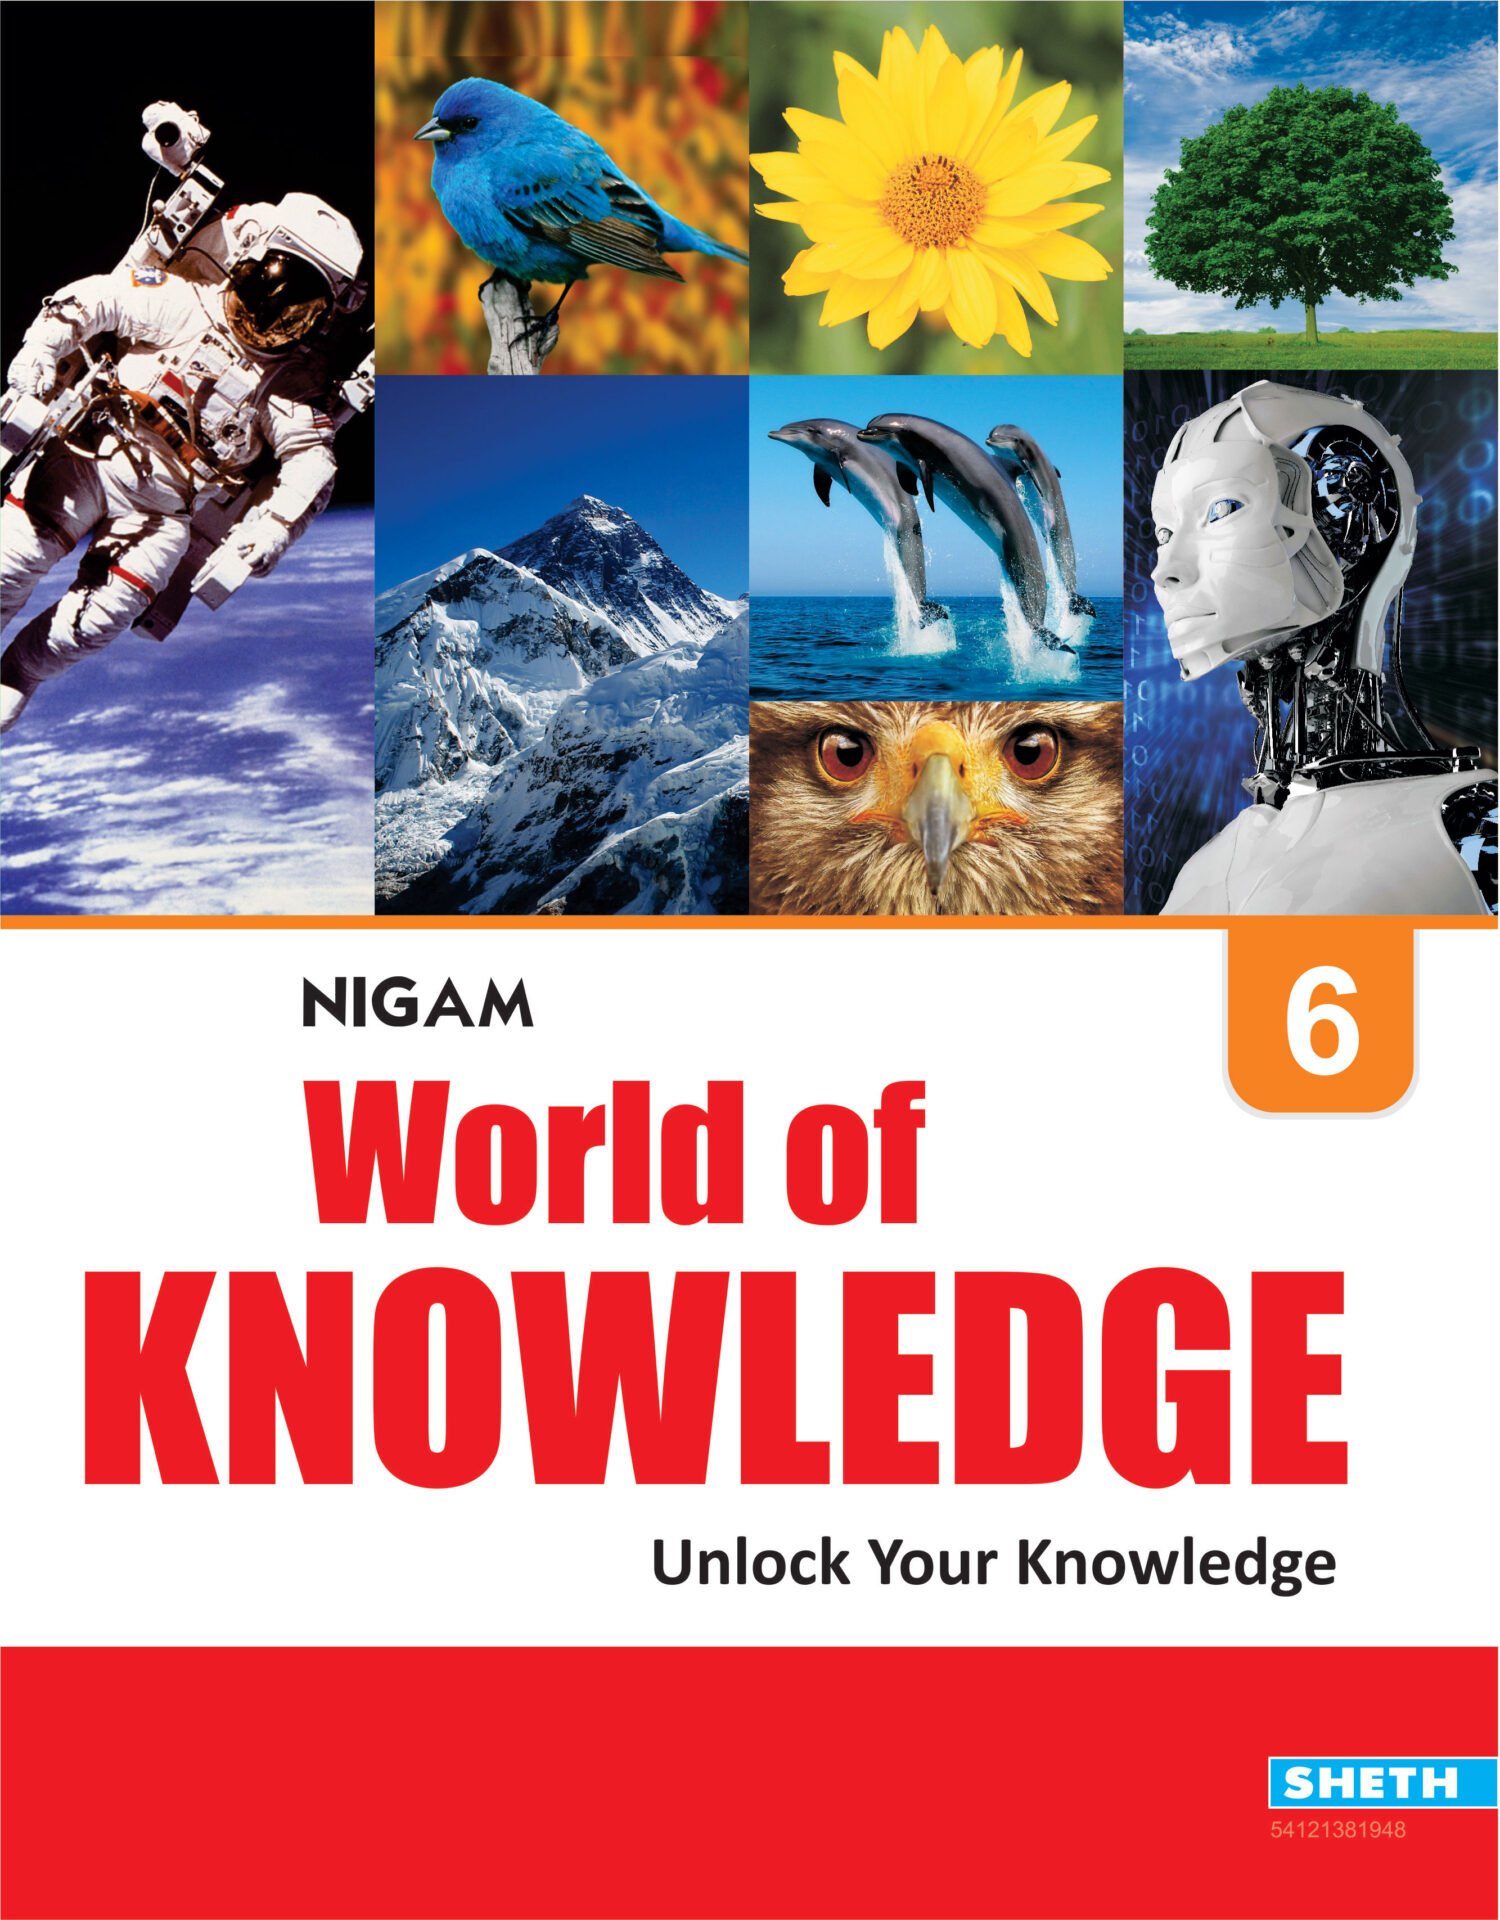 Nigam World of Knowledge 6 1 1